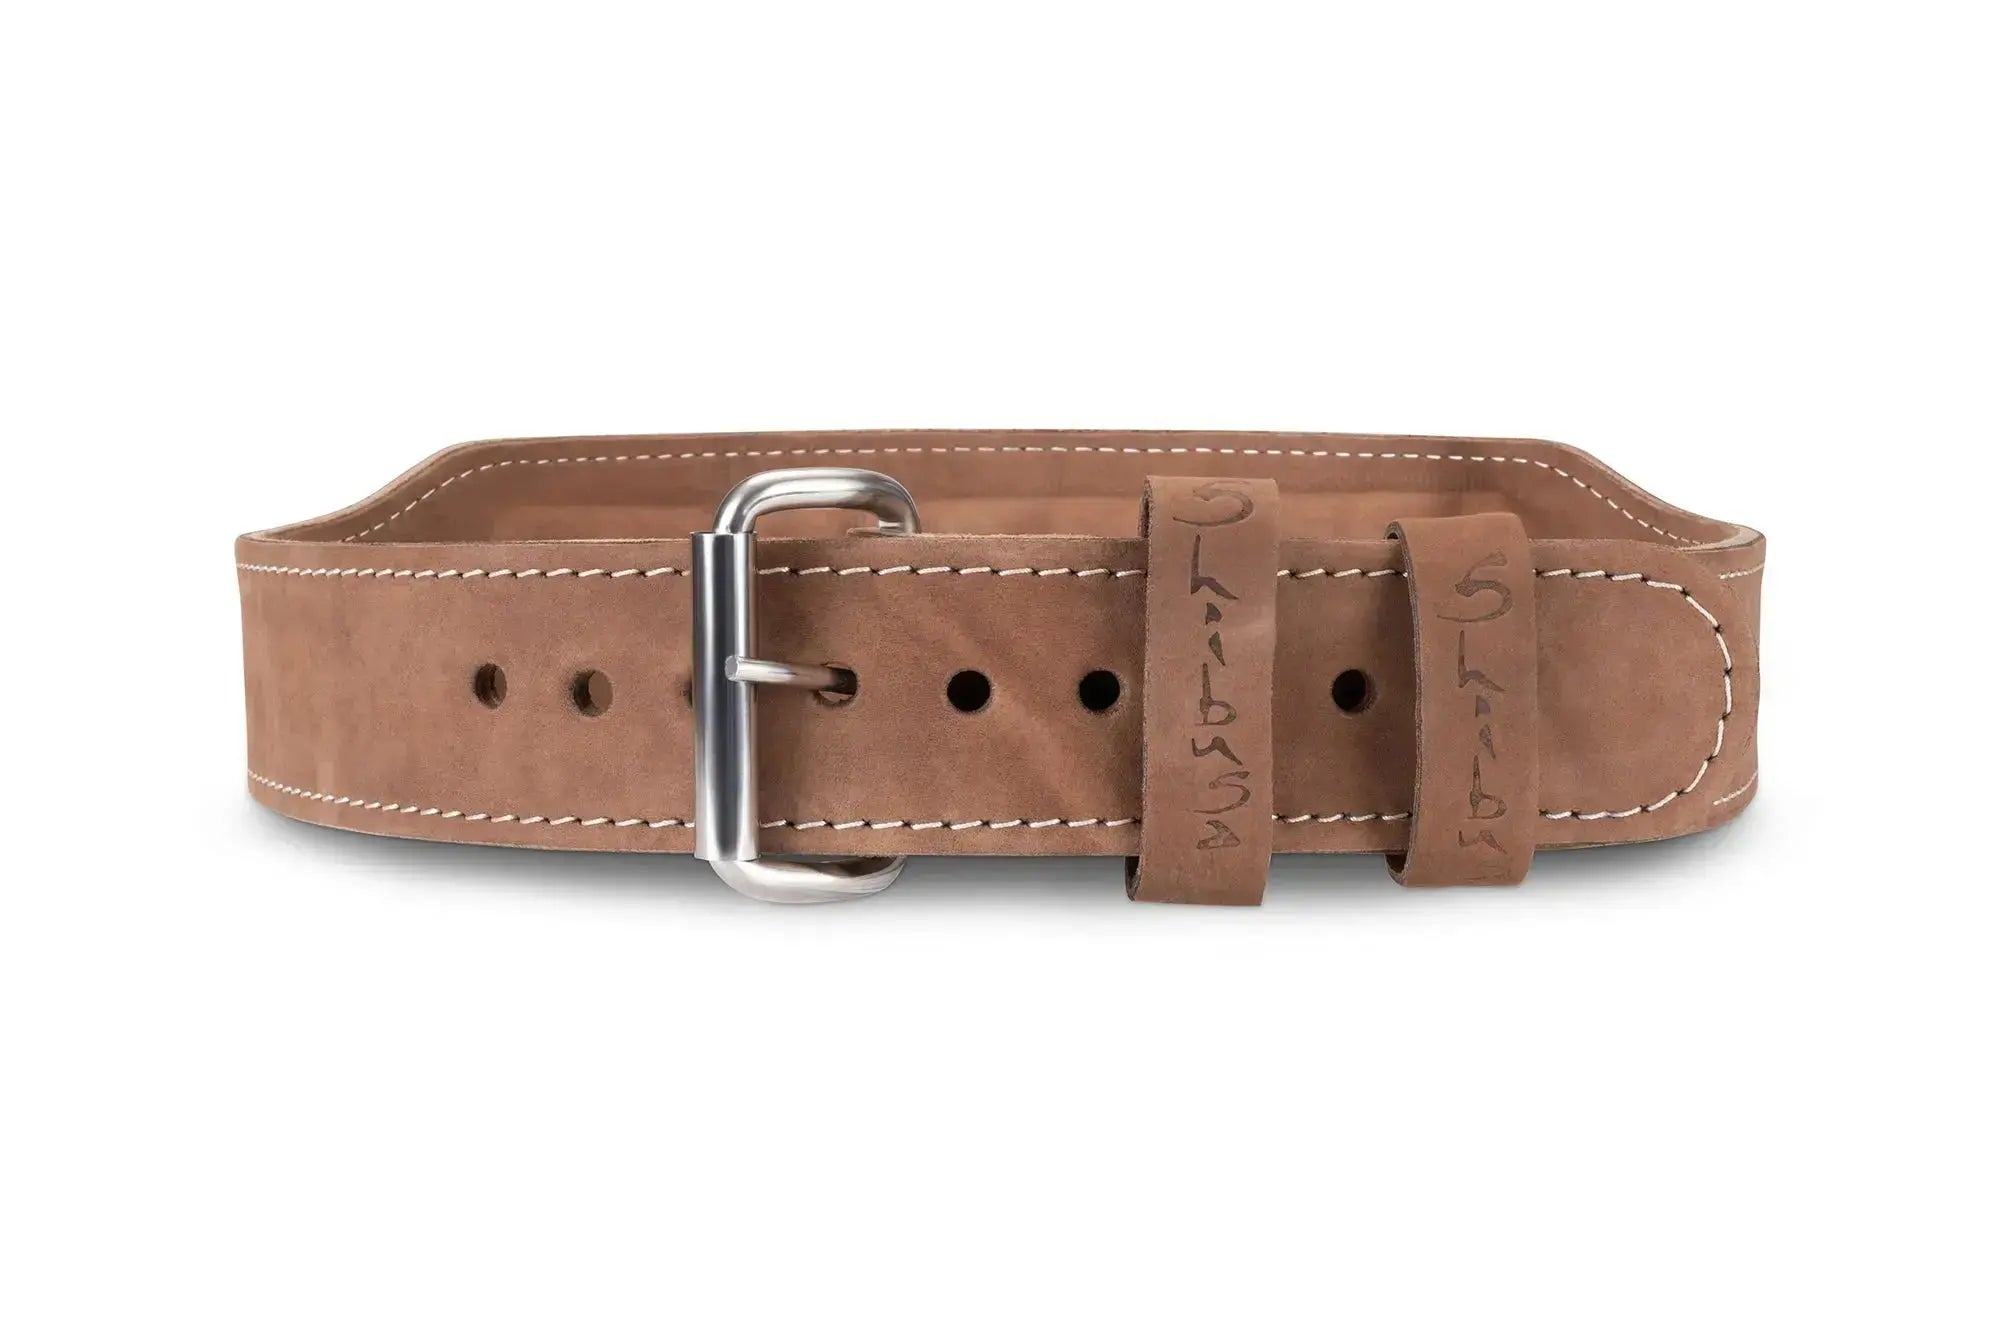 6 Inch Shibusa Premium Leather Lifting Belt - Gunsmith Fitness